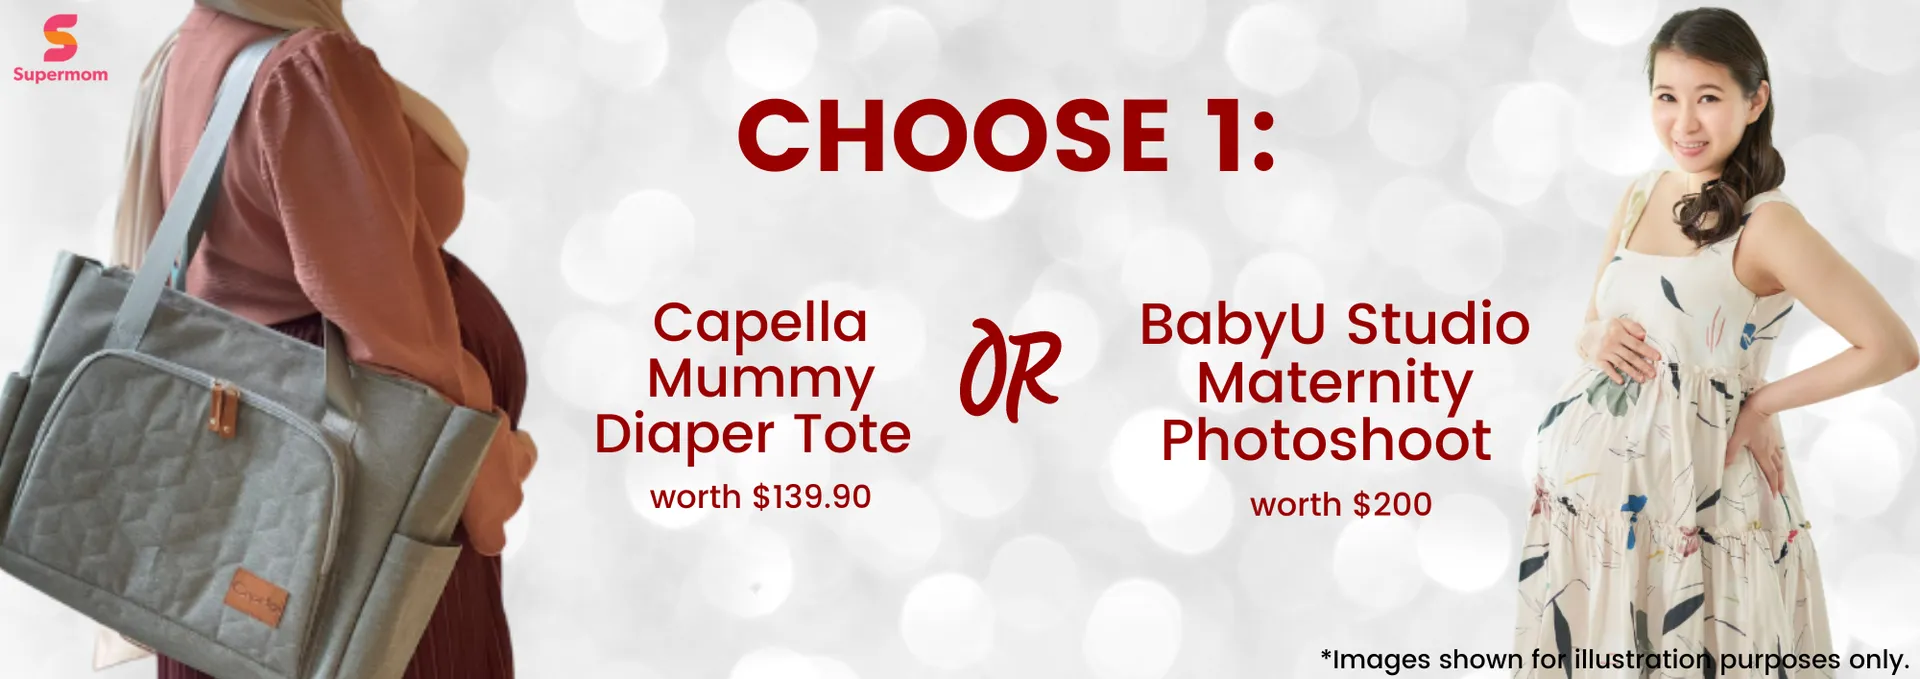 Supermom's giving away Capella Mummy Diaper Tote or BabyU Studio Maternity Photoshoot total worth $339.90